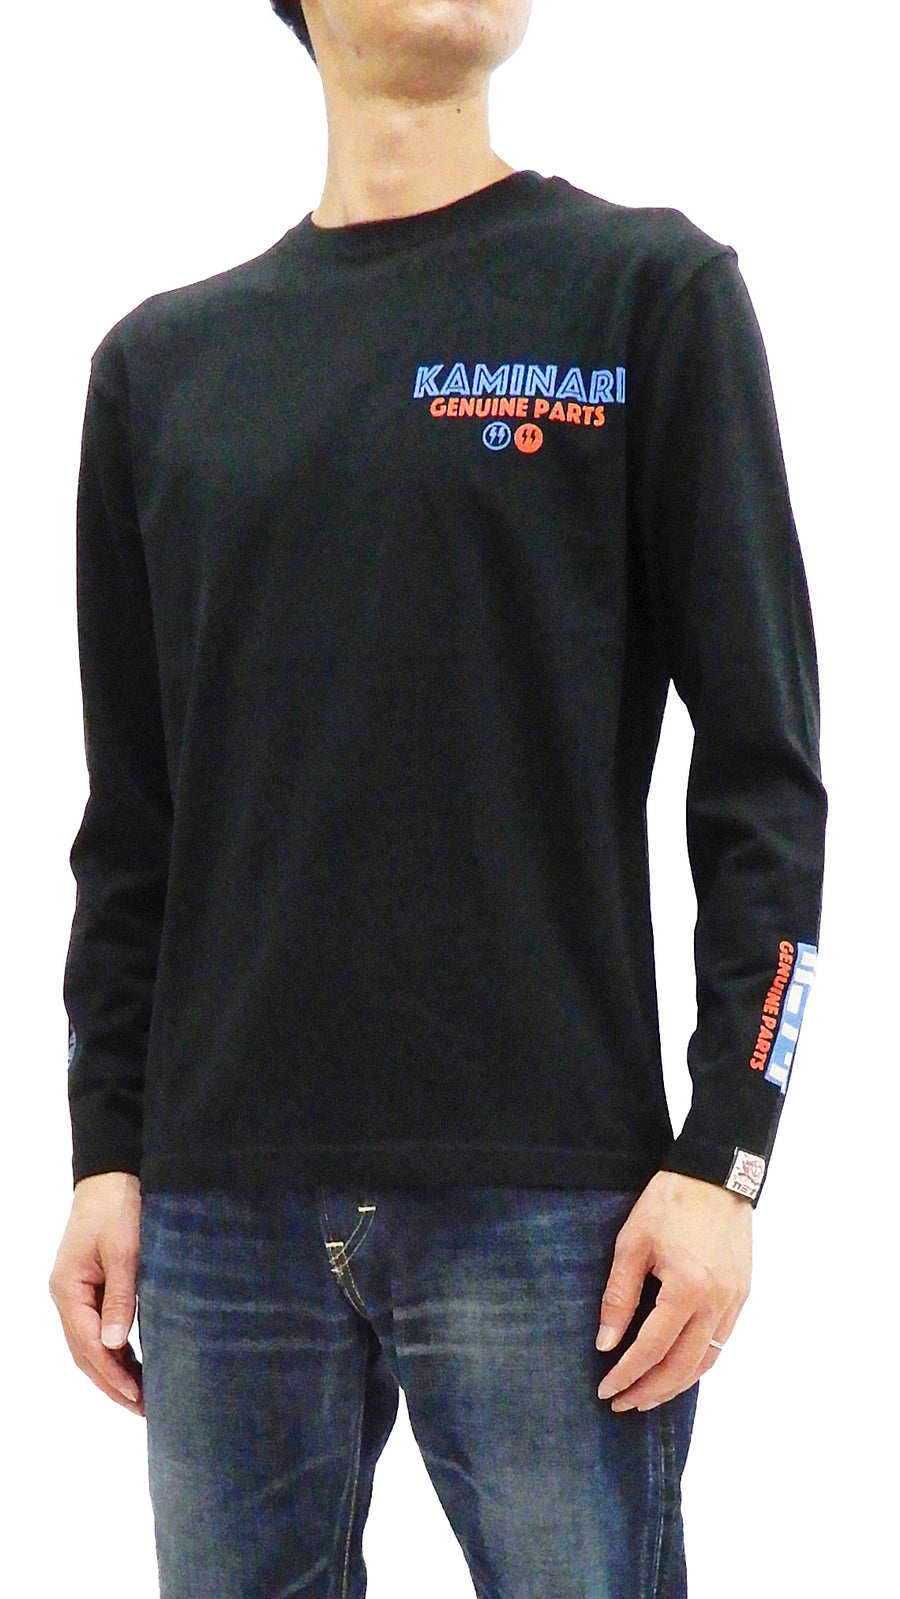 Kaminari T-Shirt Men's Classic Japanese Motorcycle Graphic Long Sleeve Tee KMLT-220 Black